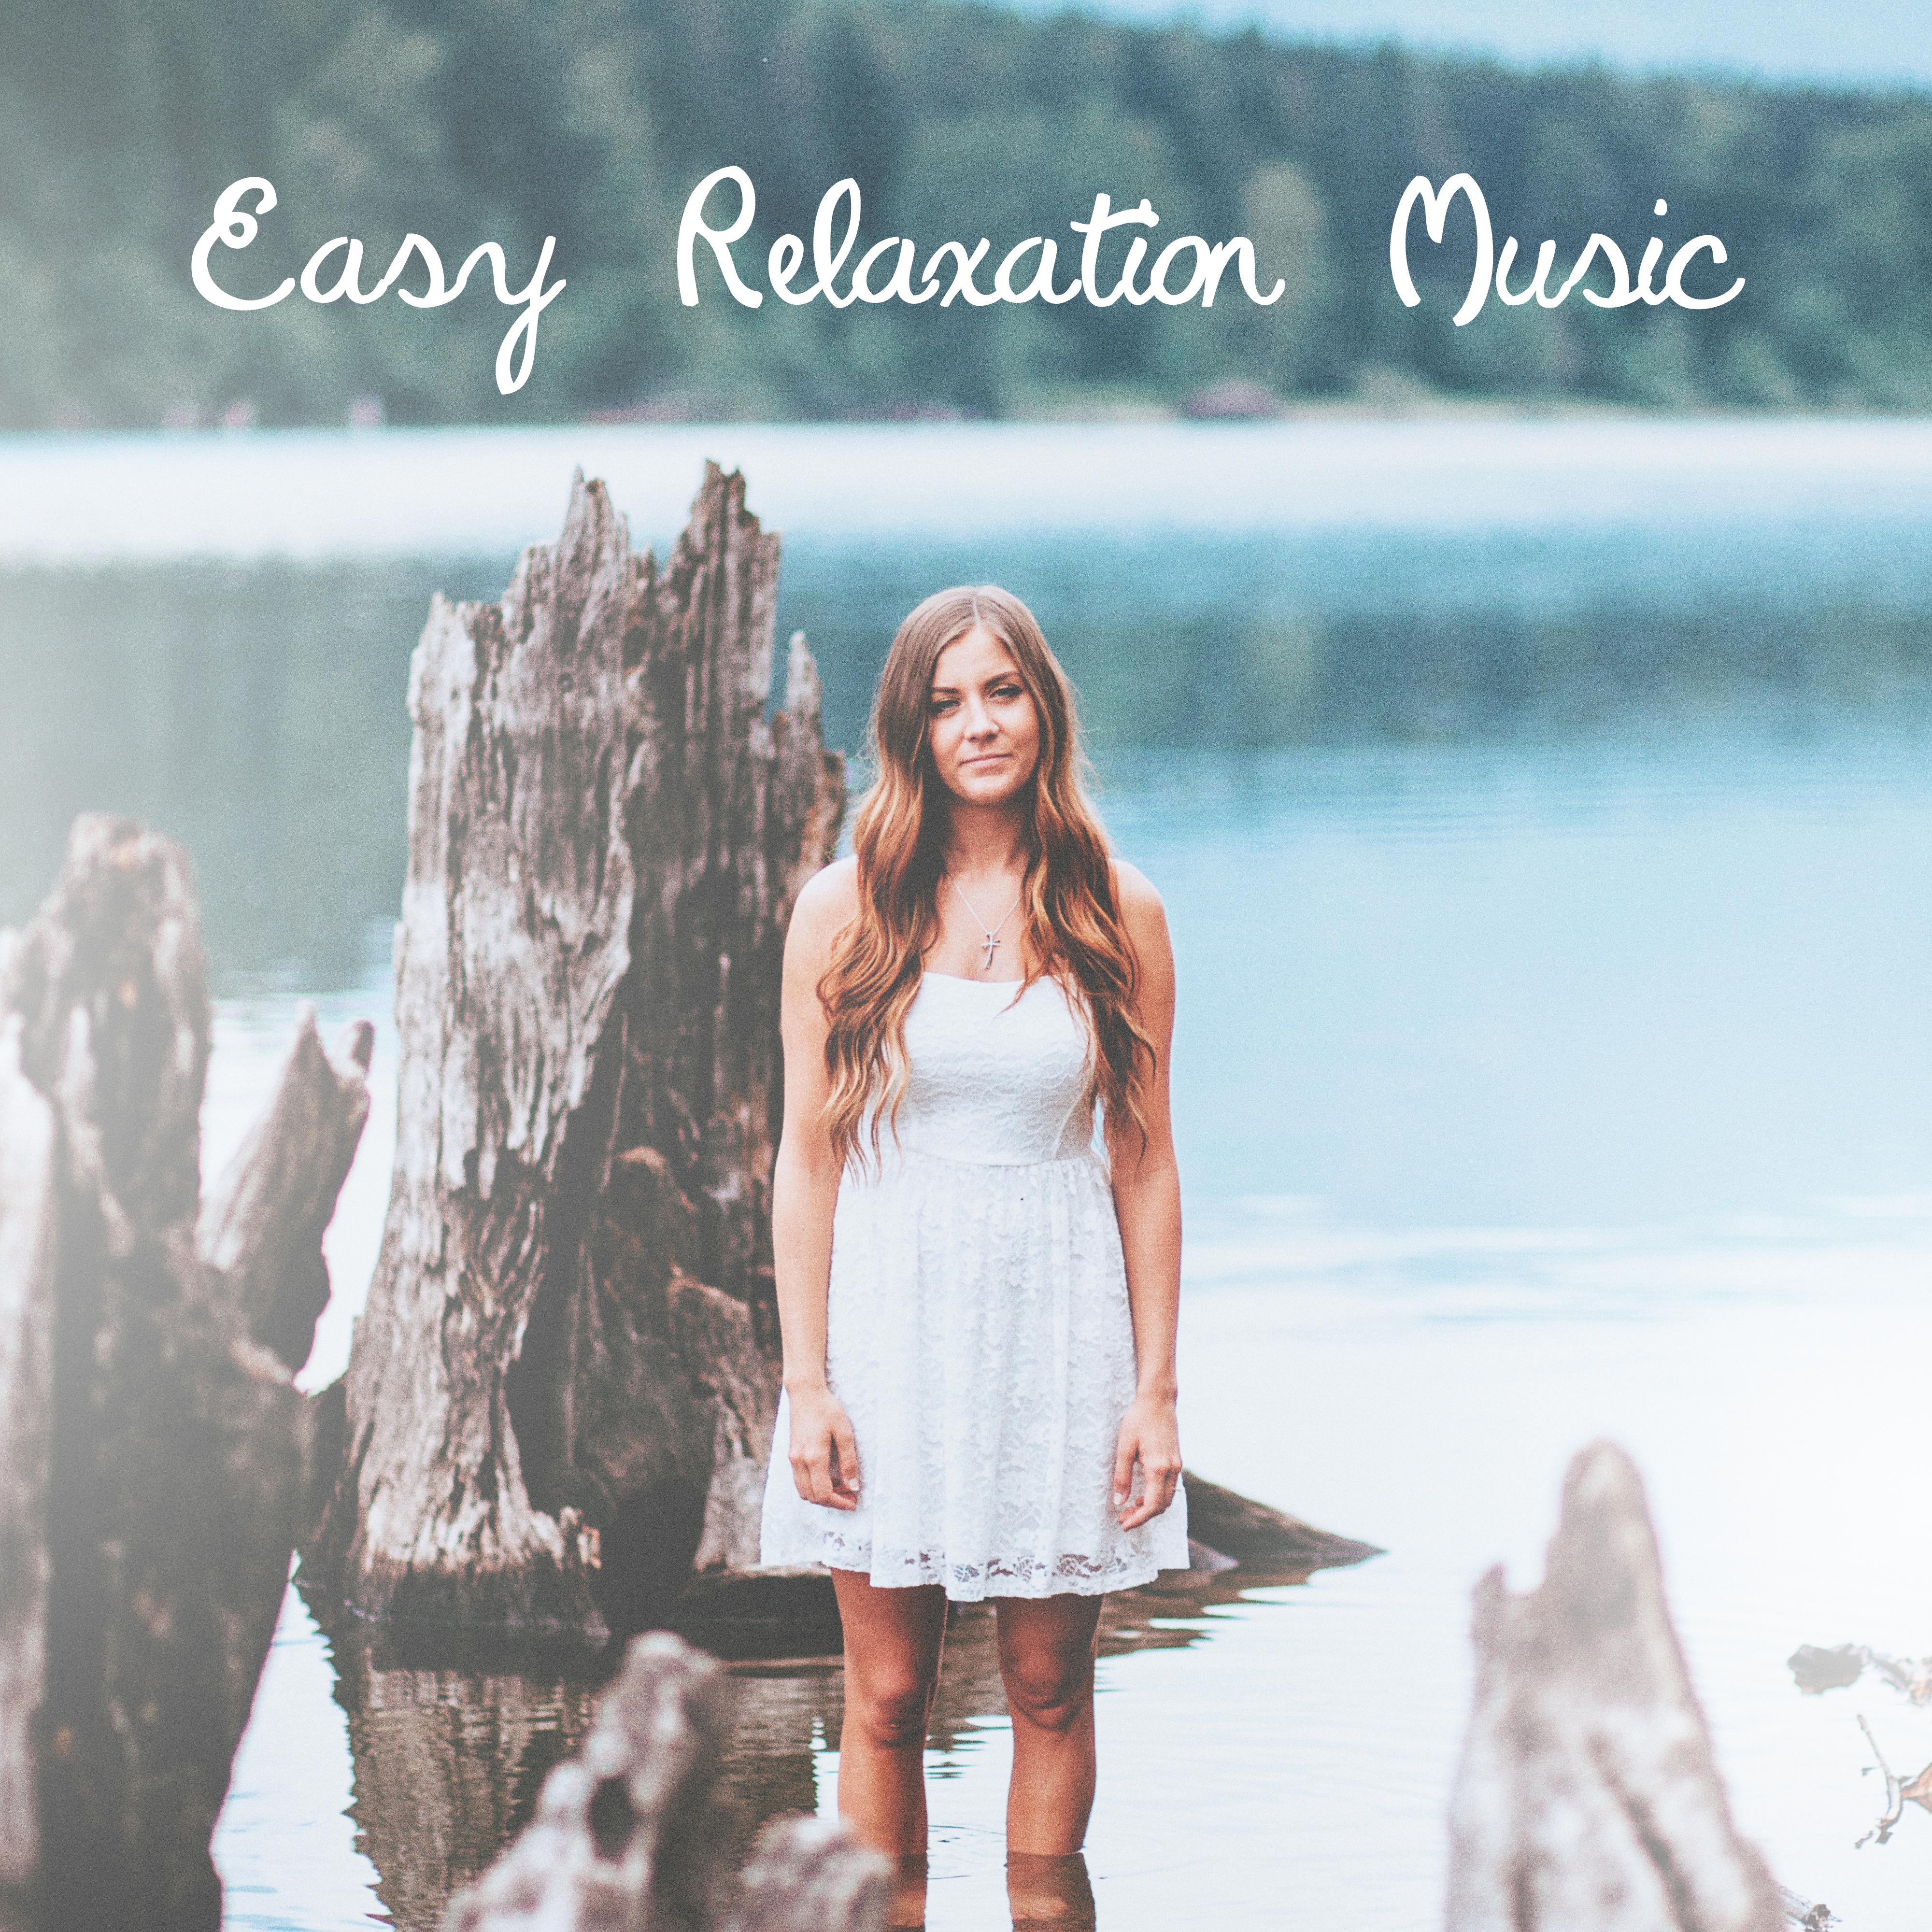 Easy Relaxation Music – Peaceful Sounds of New Age Music, Relaxation Music for Meditation Yoga, Easy Sleep, Fall Asleep Easily, Ocean Waves